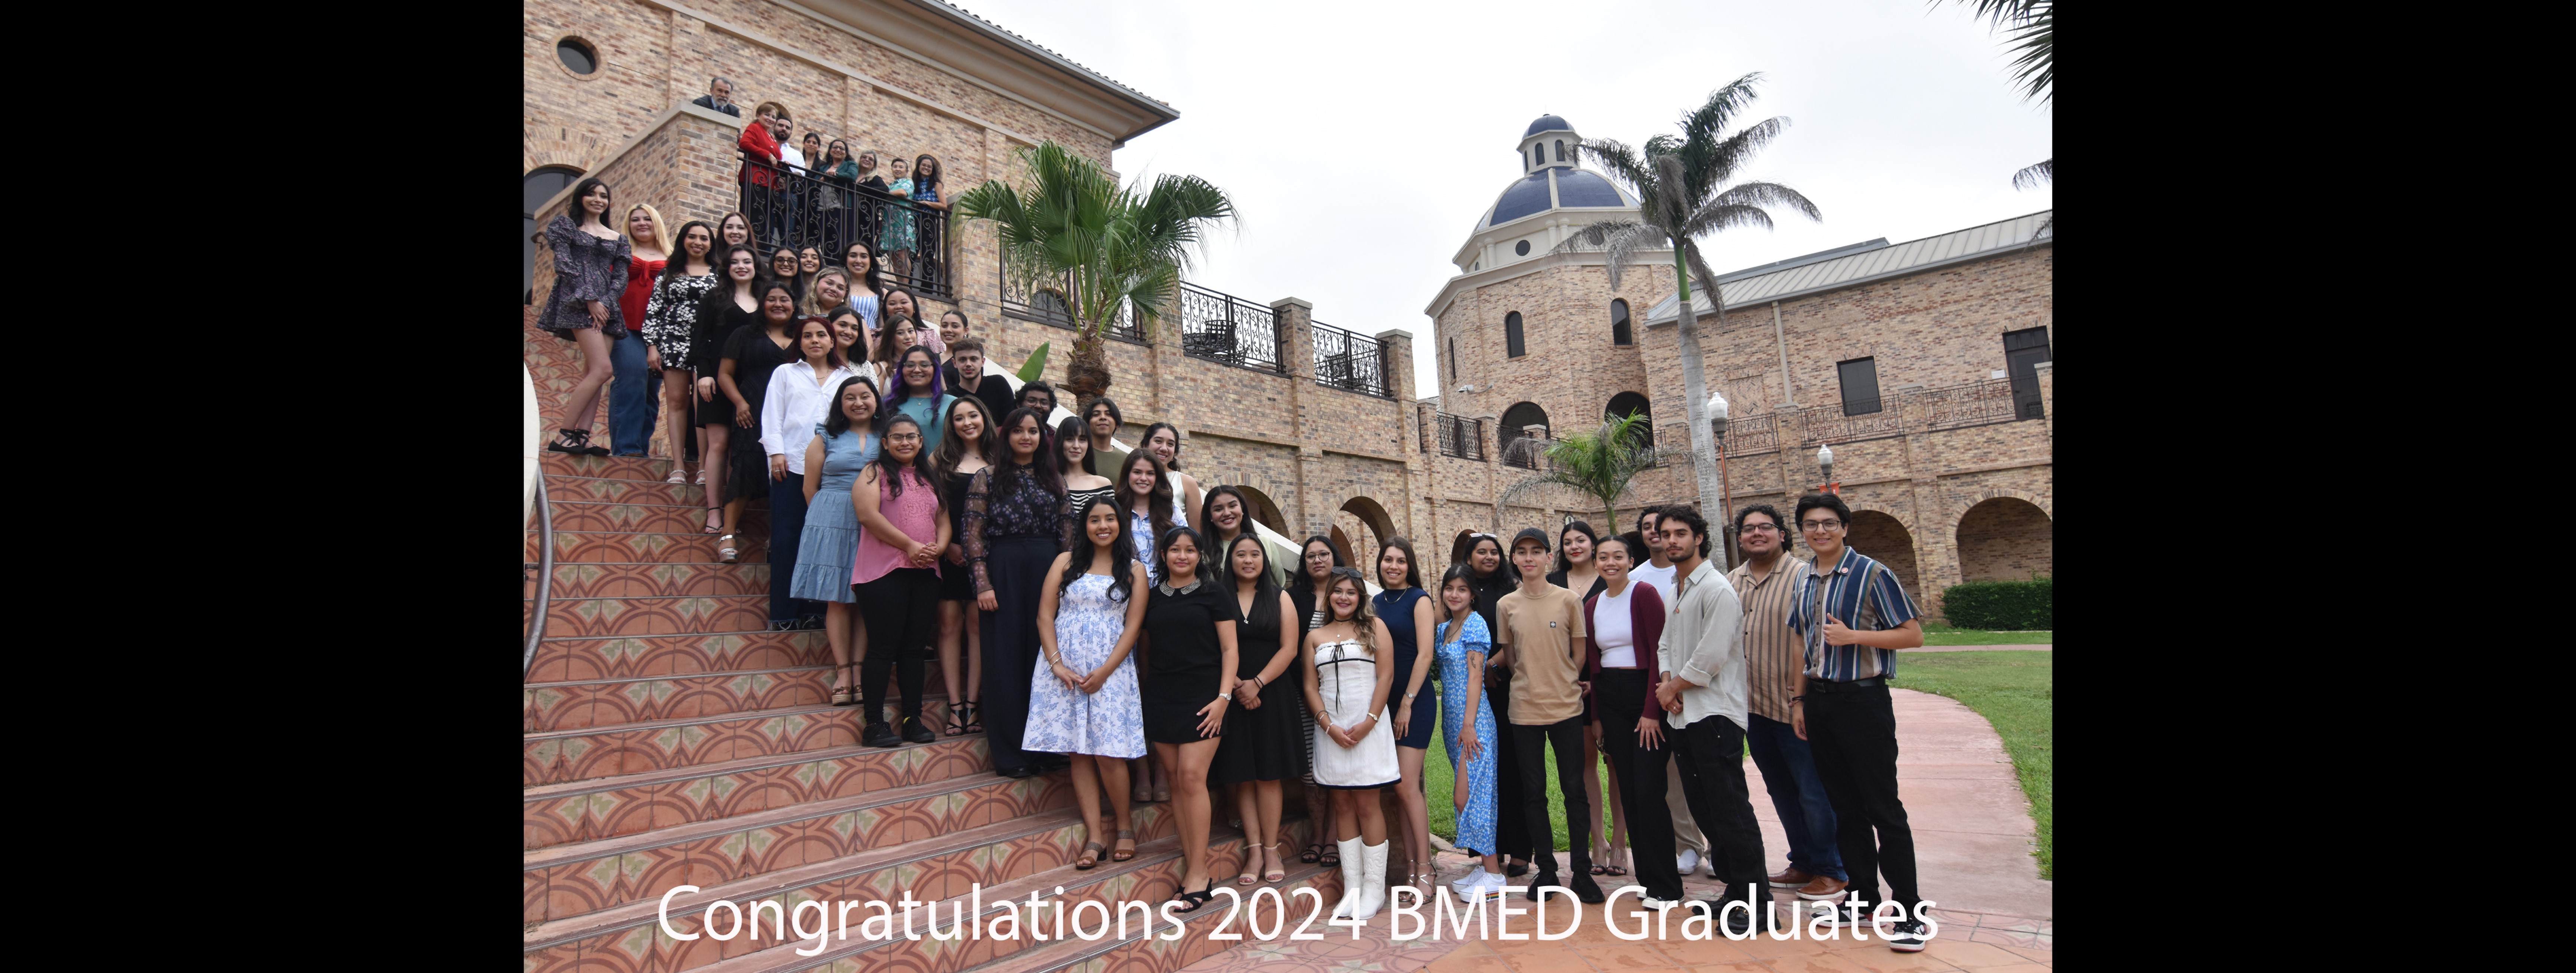 BMED Graduation